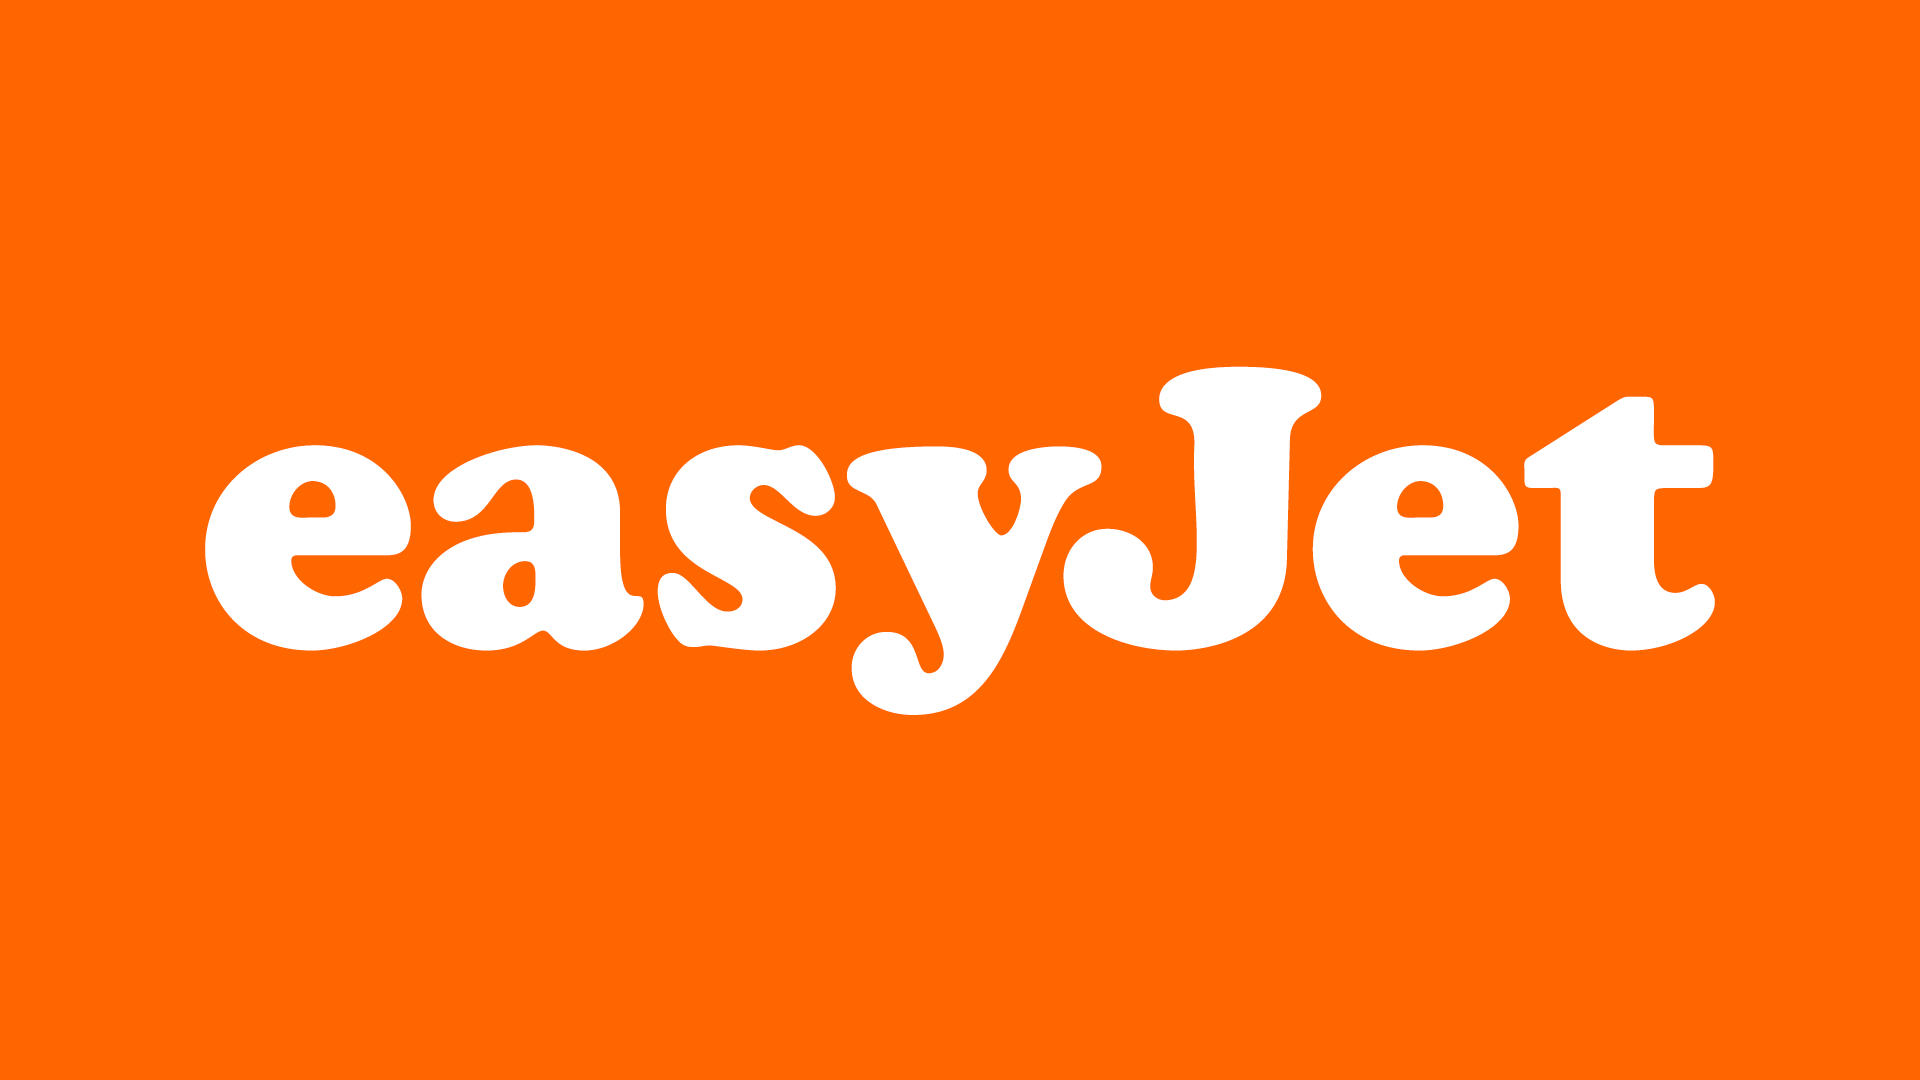 easyJet main logo. White writing on an orange background